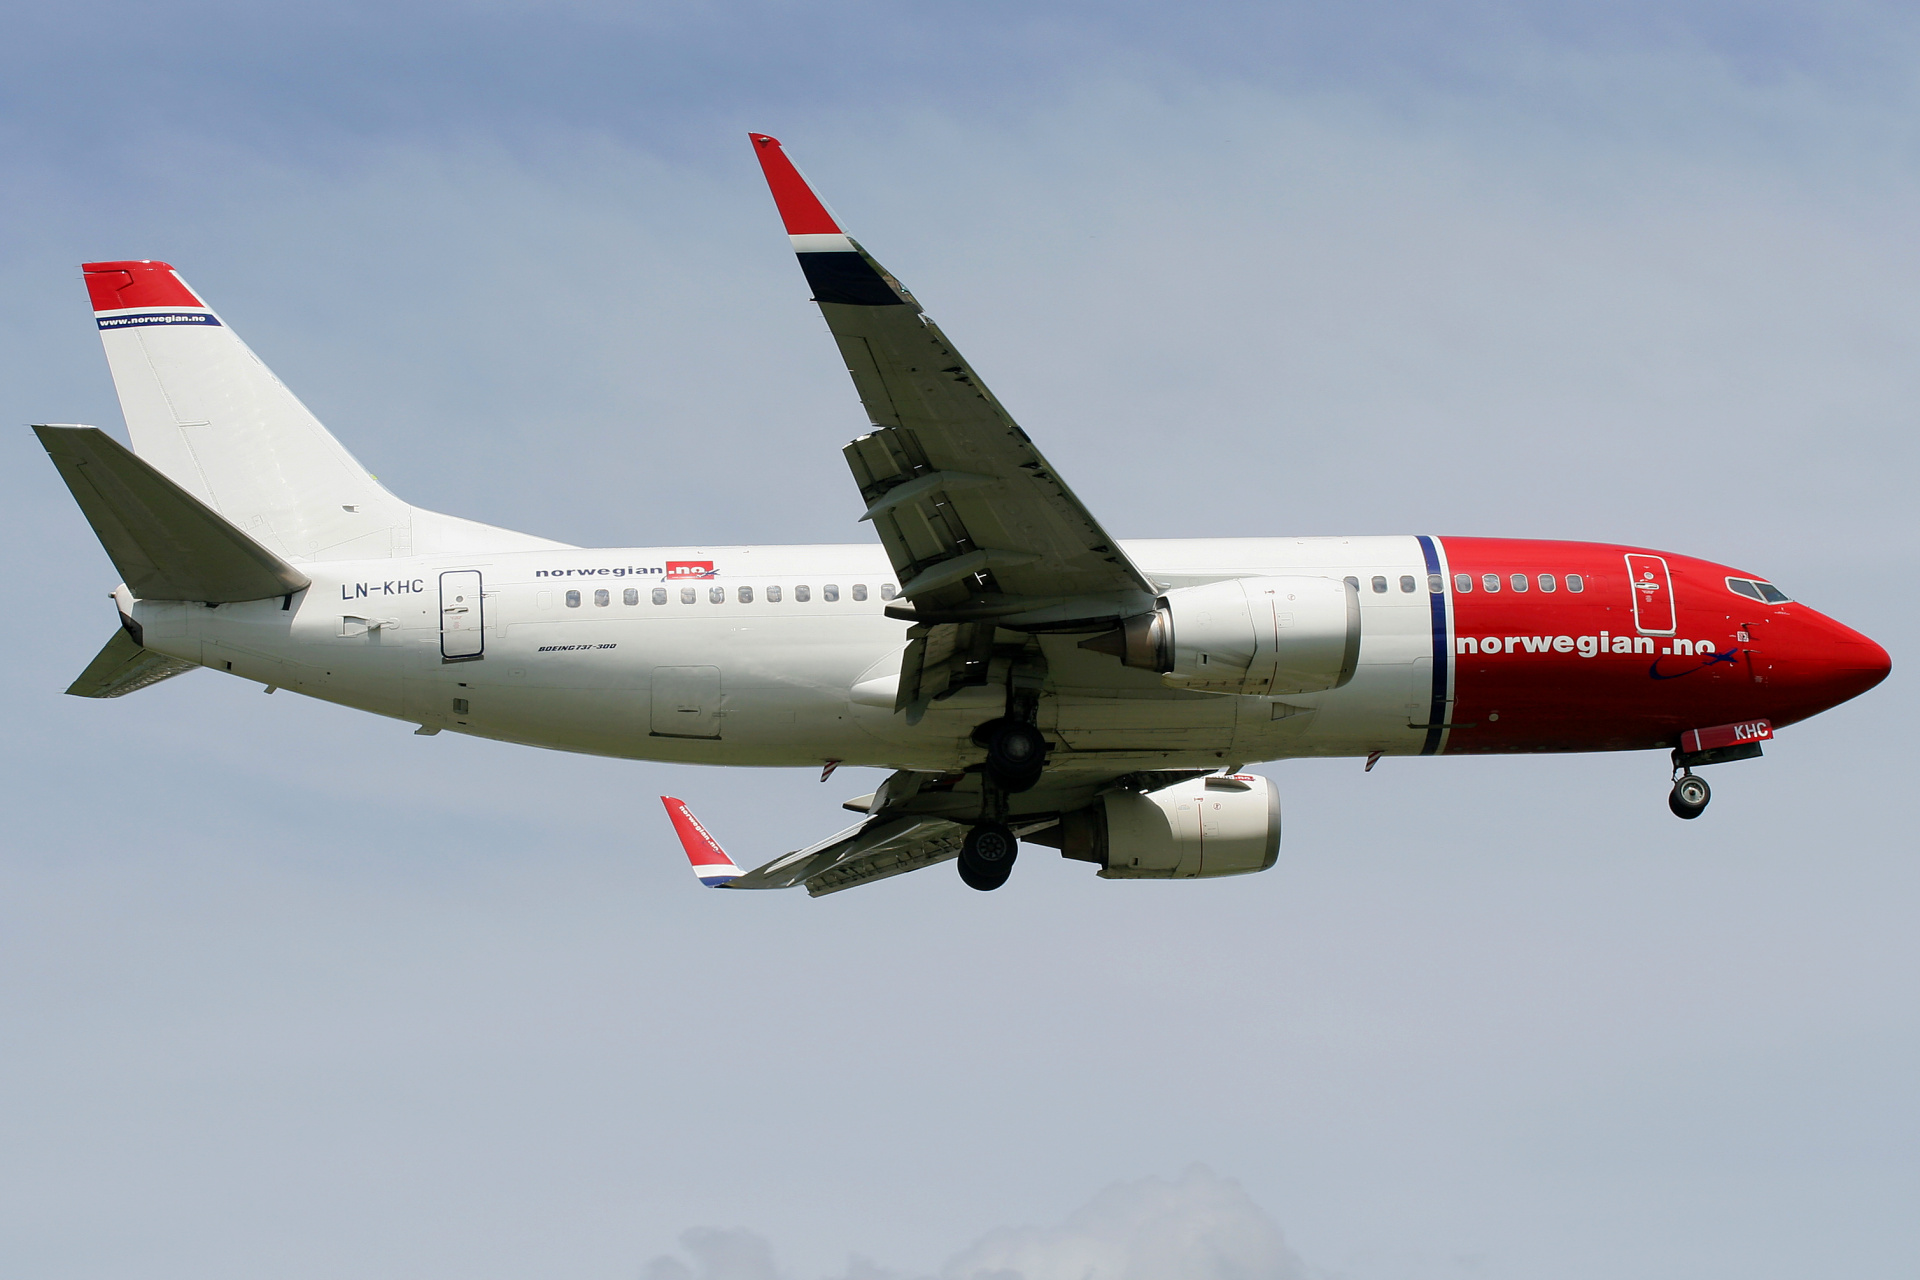 LN-KHC (Aircraft » EPWA Spotting » Boeing 737-300 » Norwegian Air Shuttle)